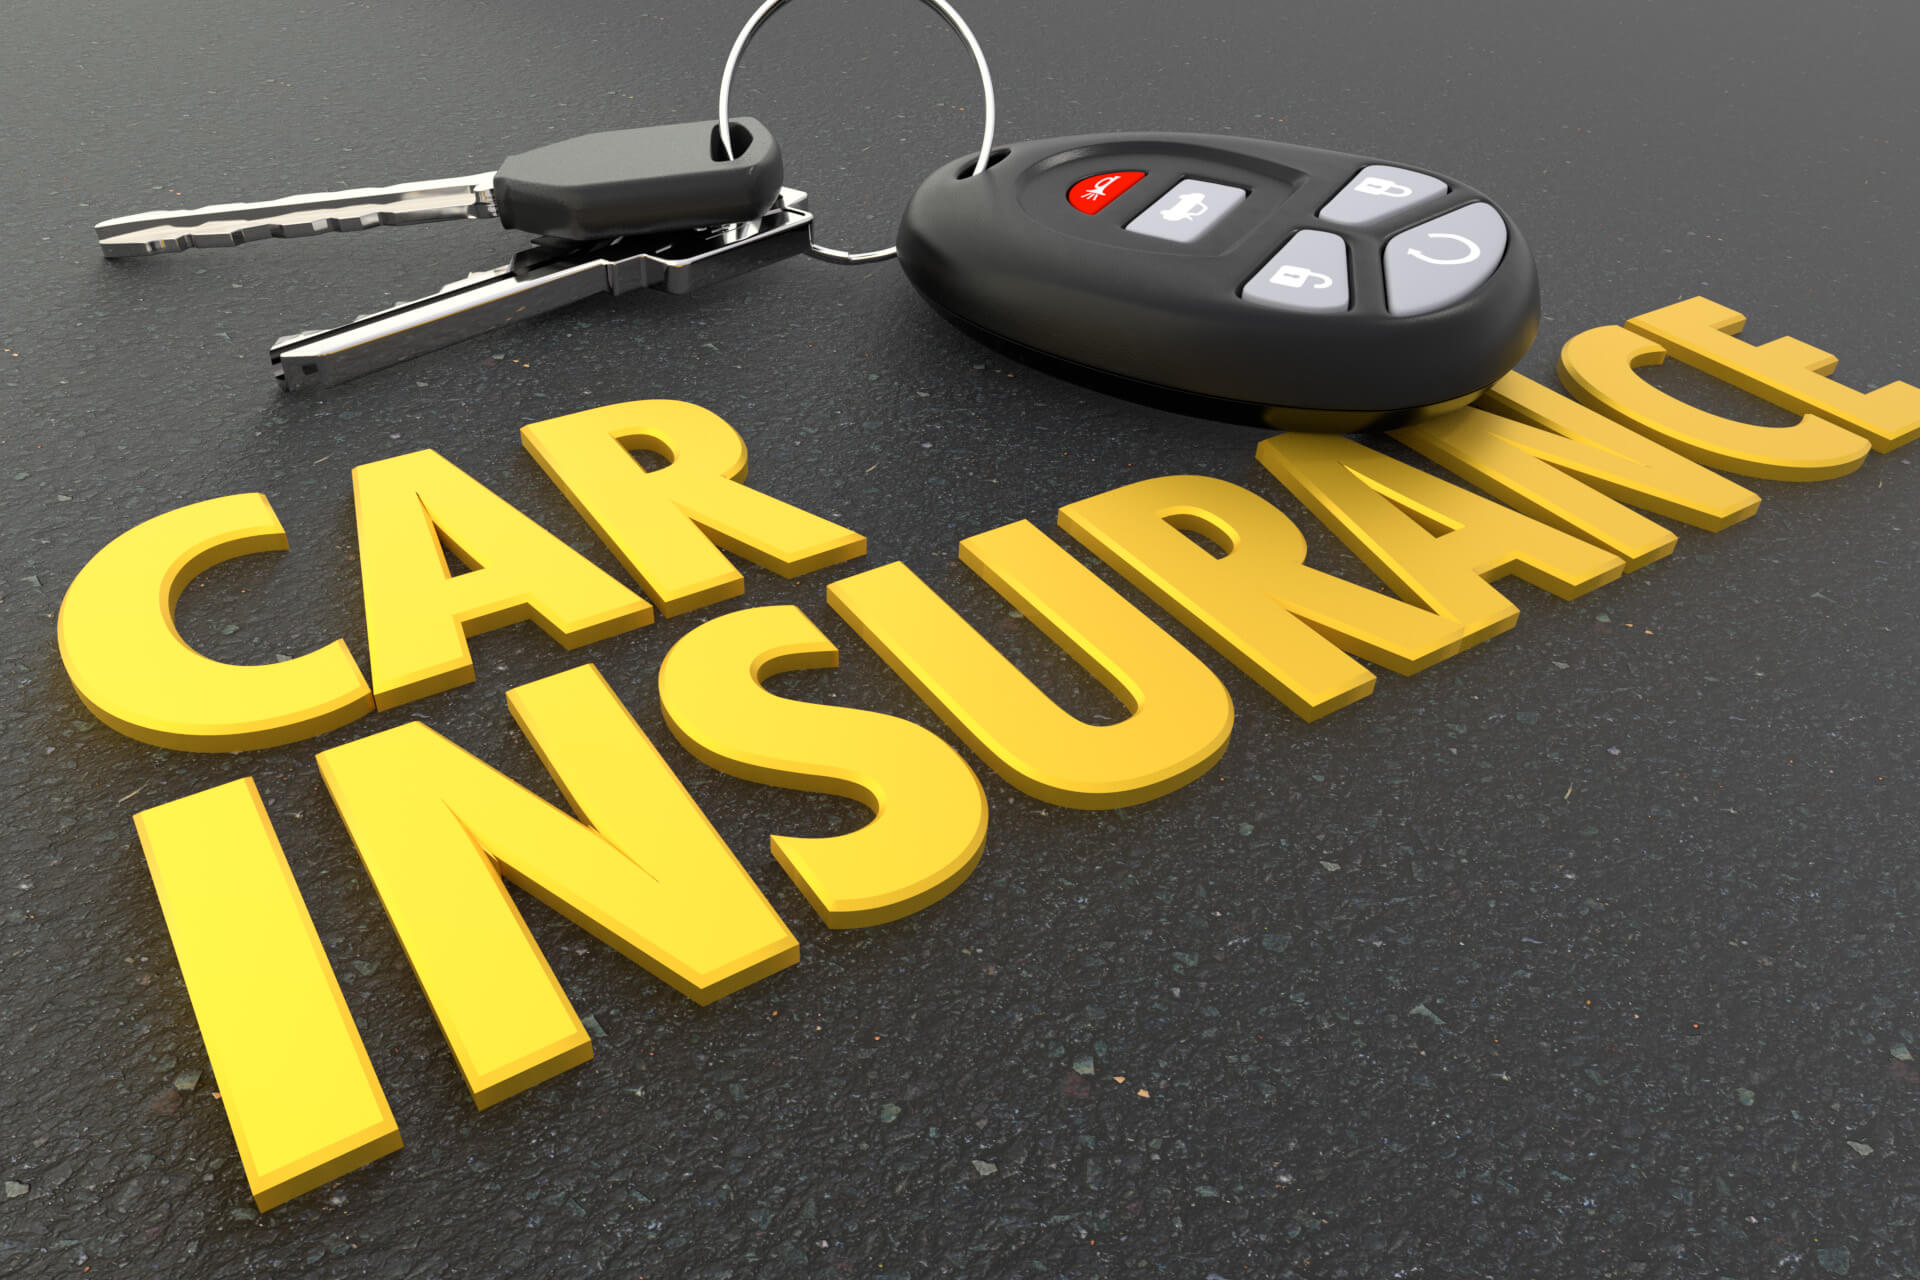 Car keys car insurance concept free image download